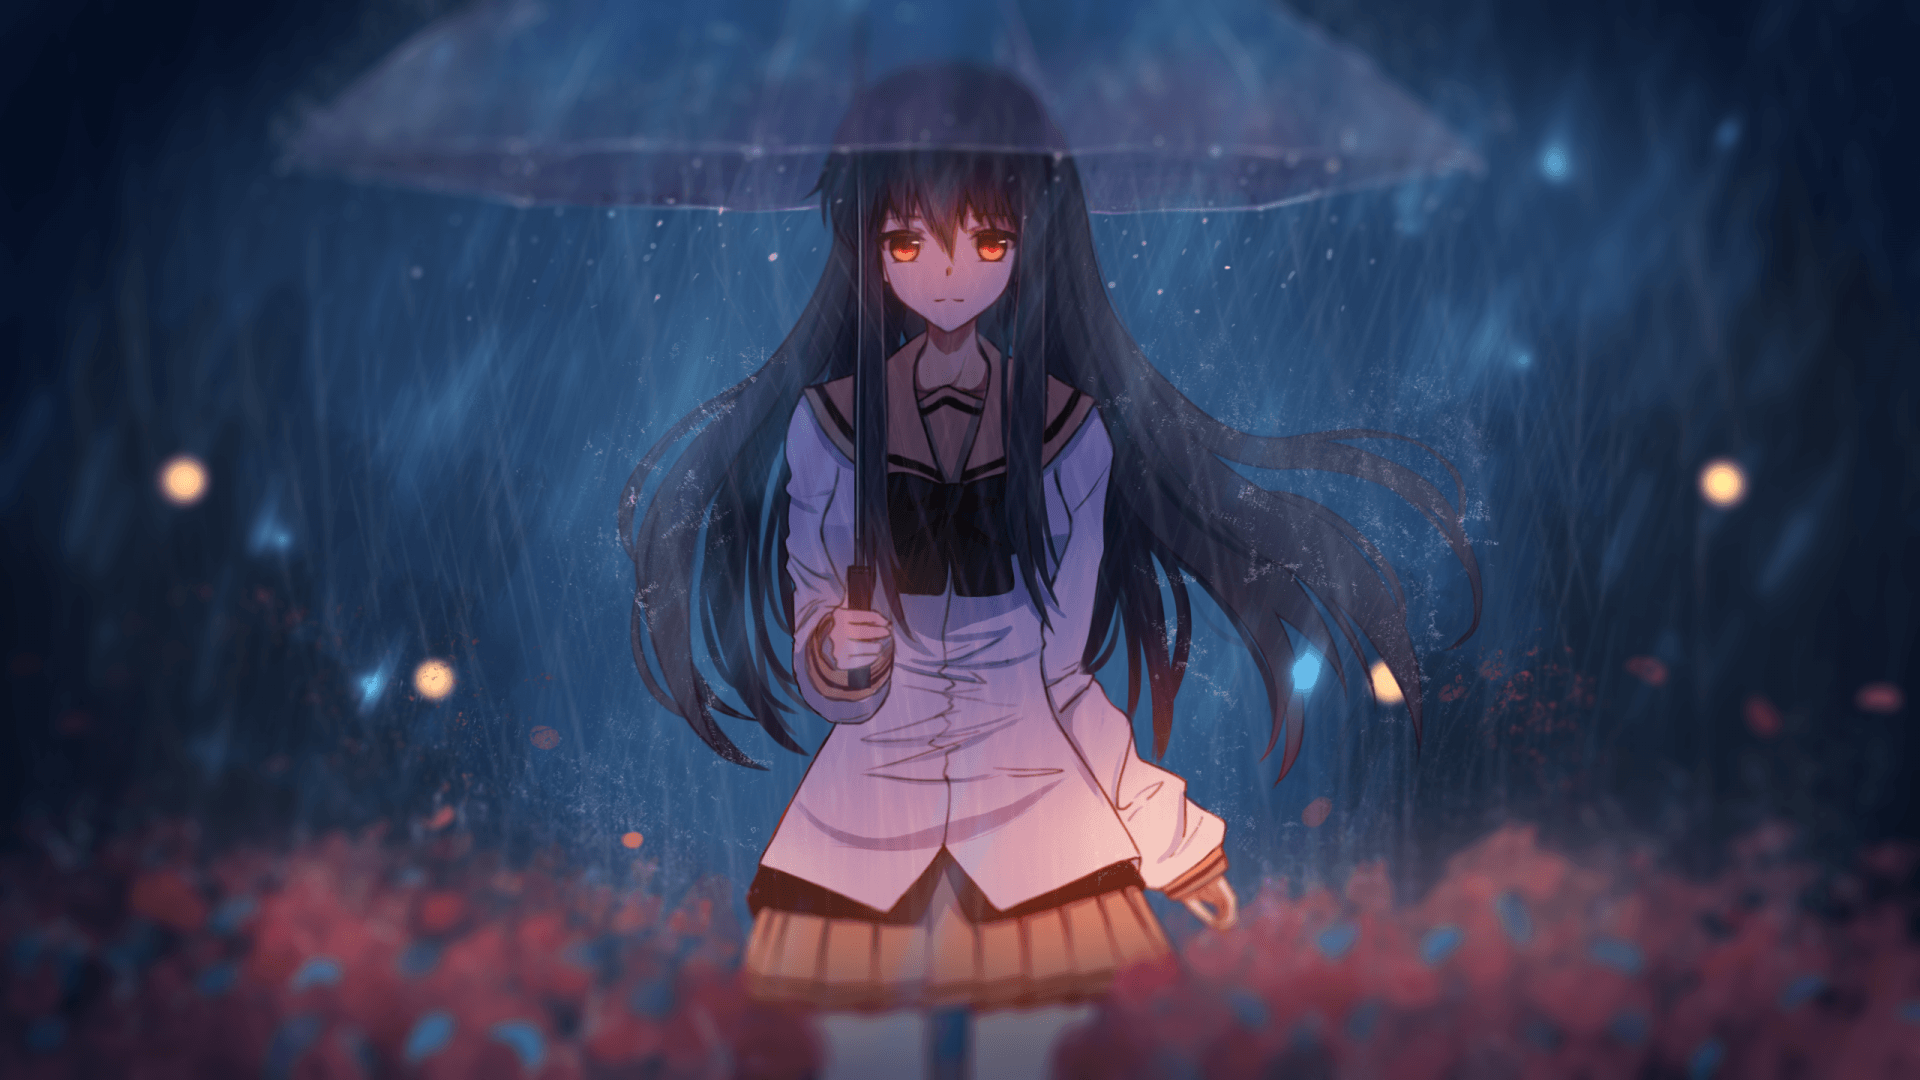 Anime girl under an umbrella in the rain Desktop wallpaper 1920x1080